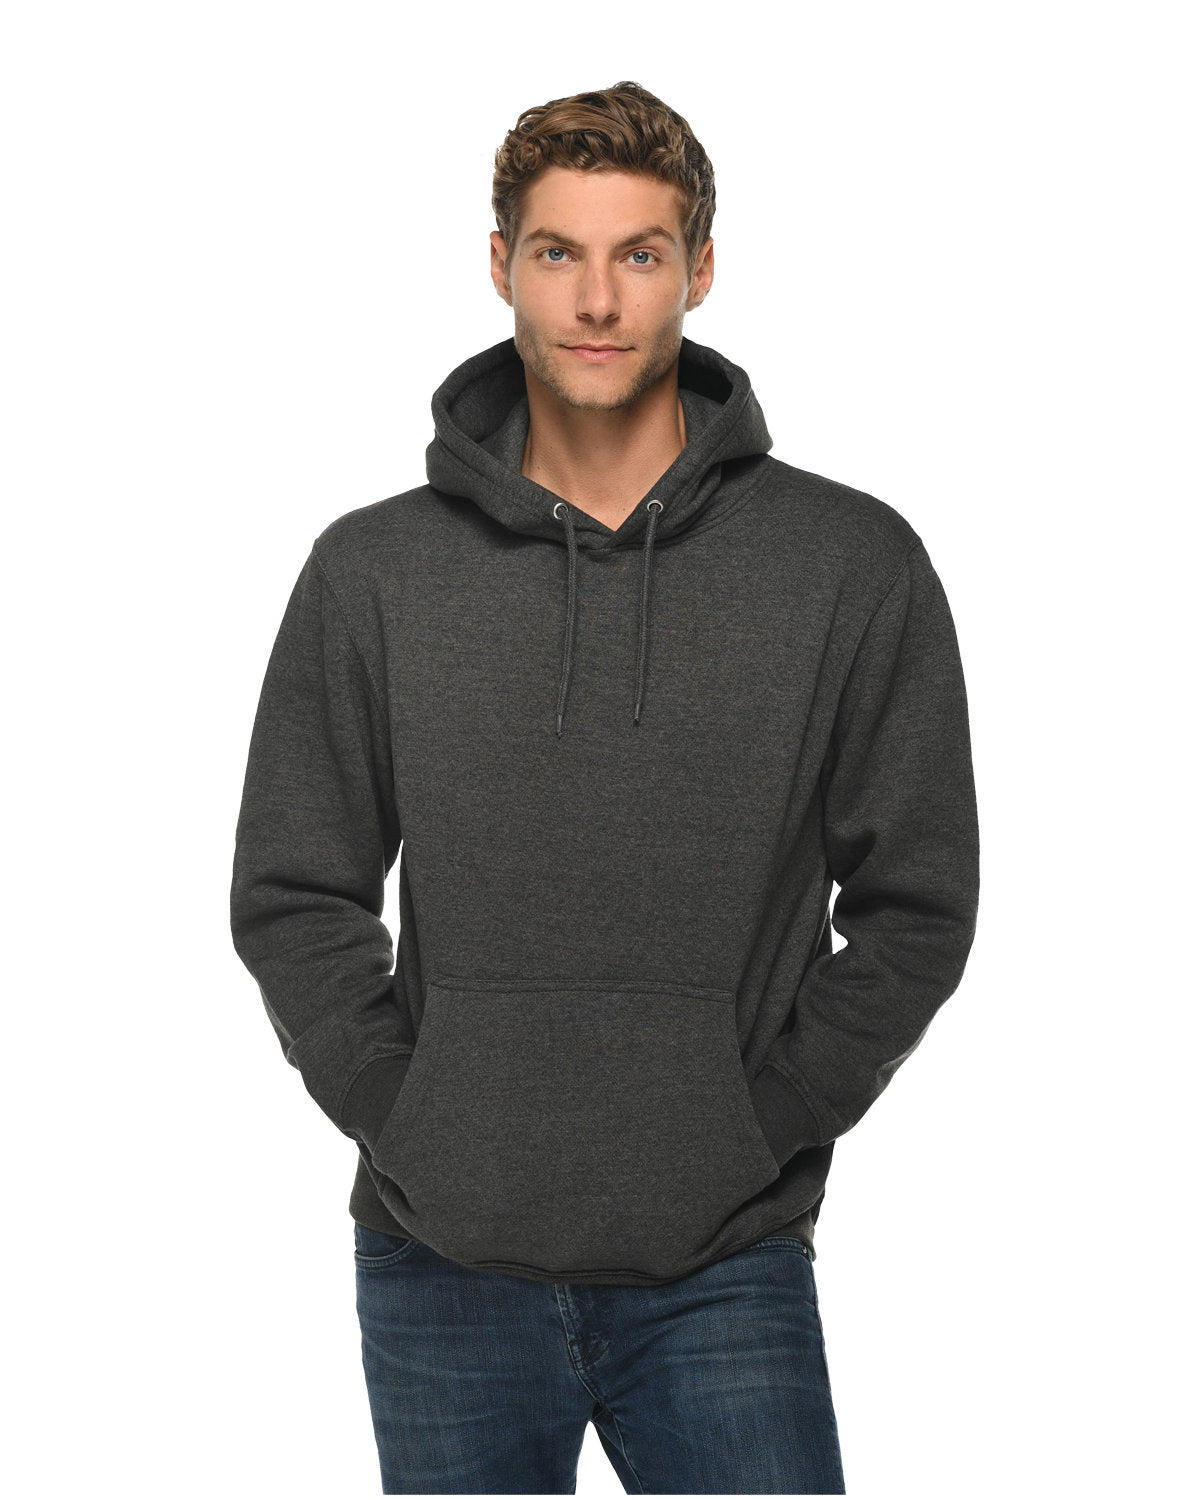 LS14001 Lane Seven Unisex Premium Pullover Hooded Sweatshirt